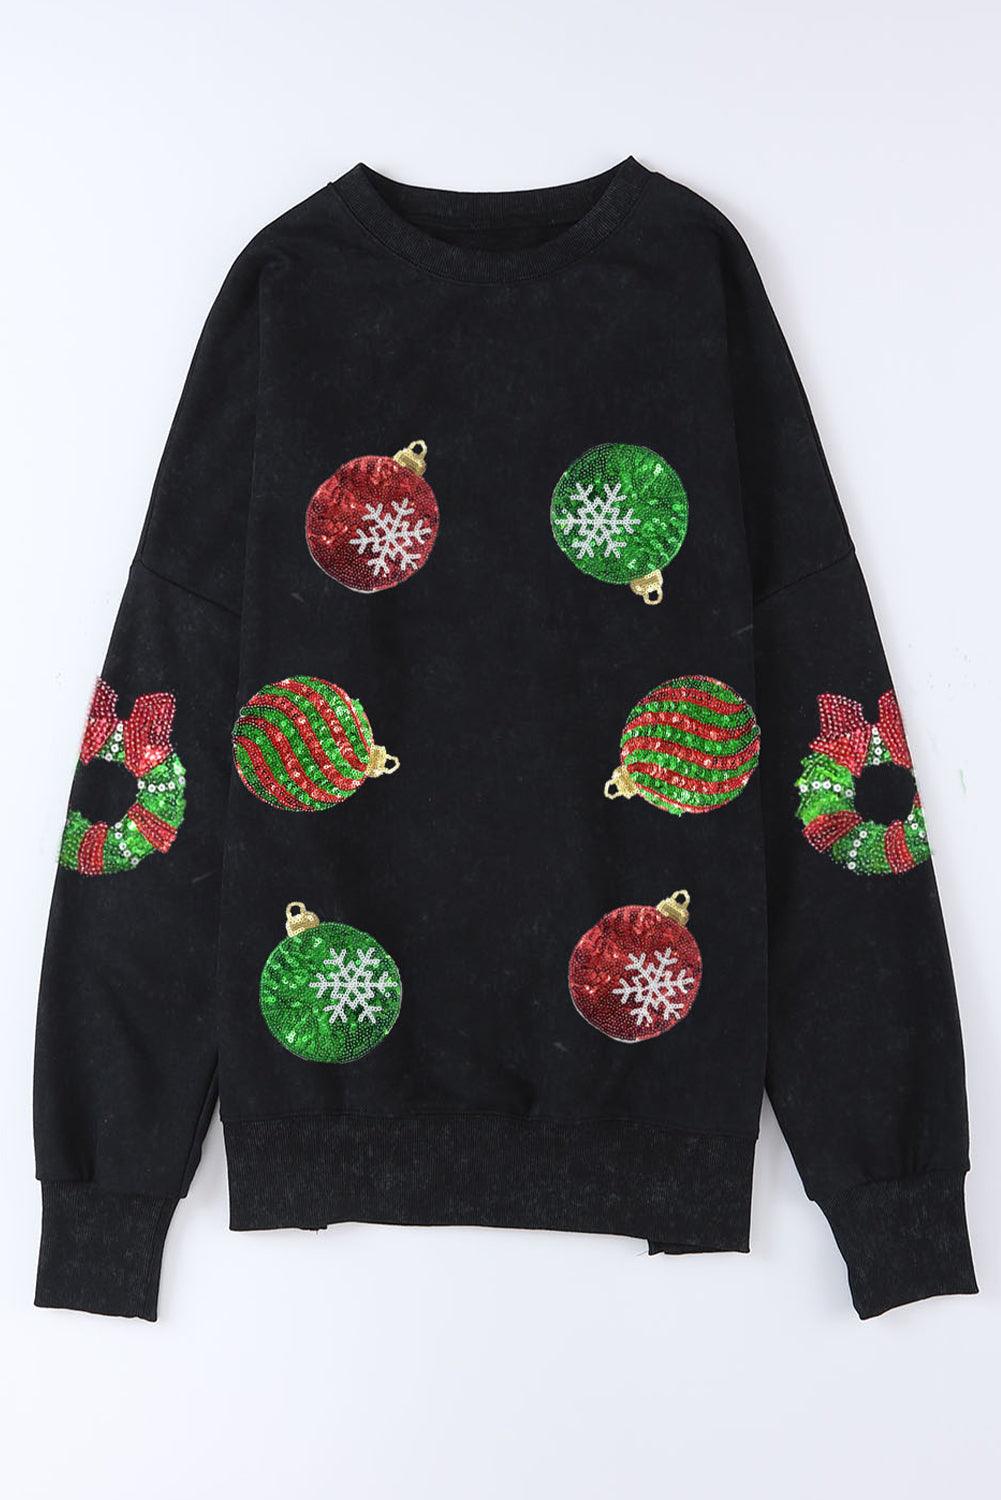 Black Sequined Christmas Graphic Split Sweatshirt - L & M Kee, LLC